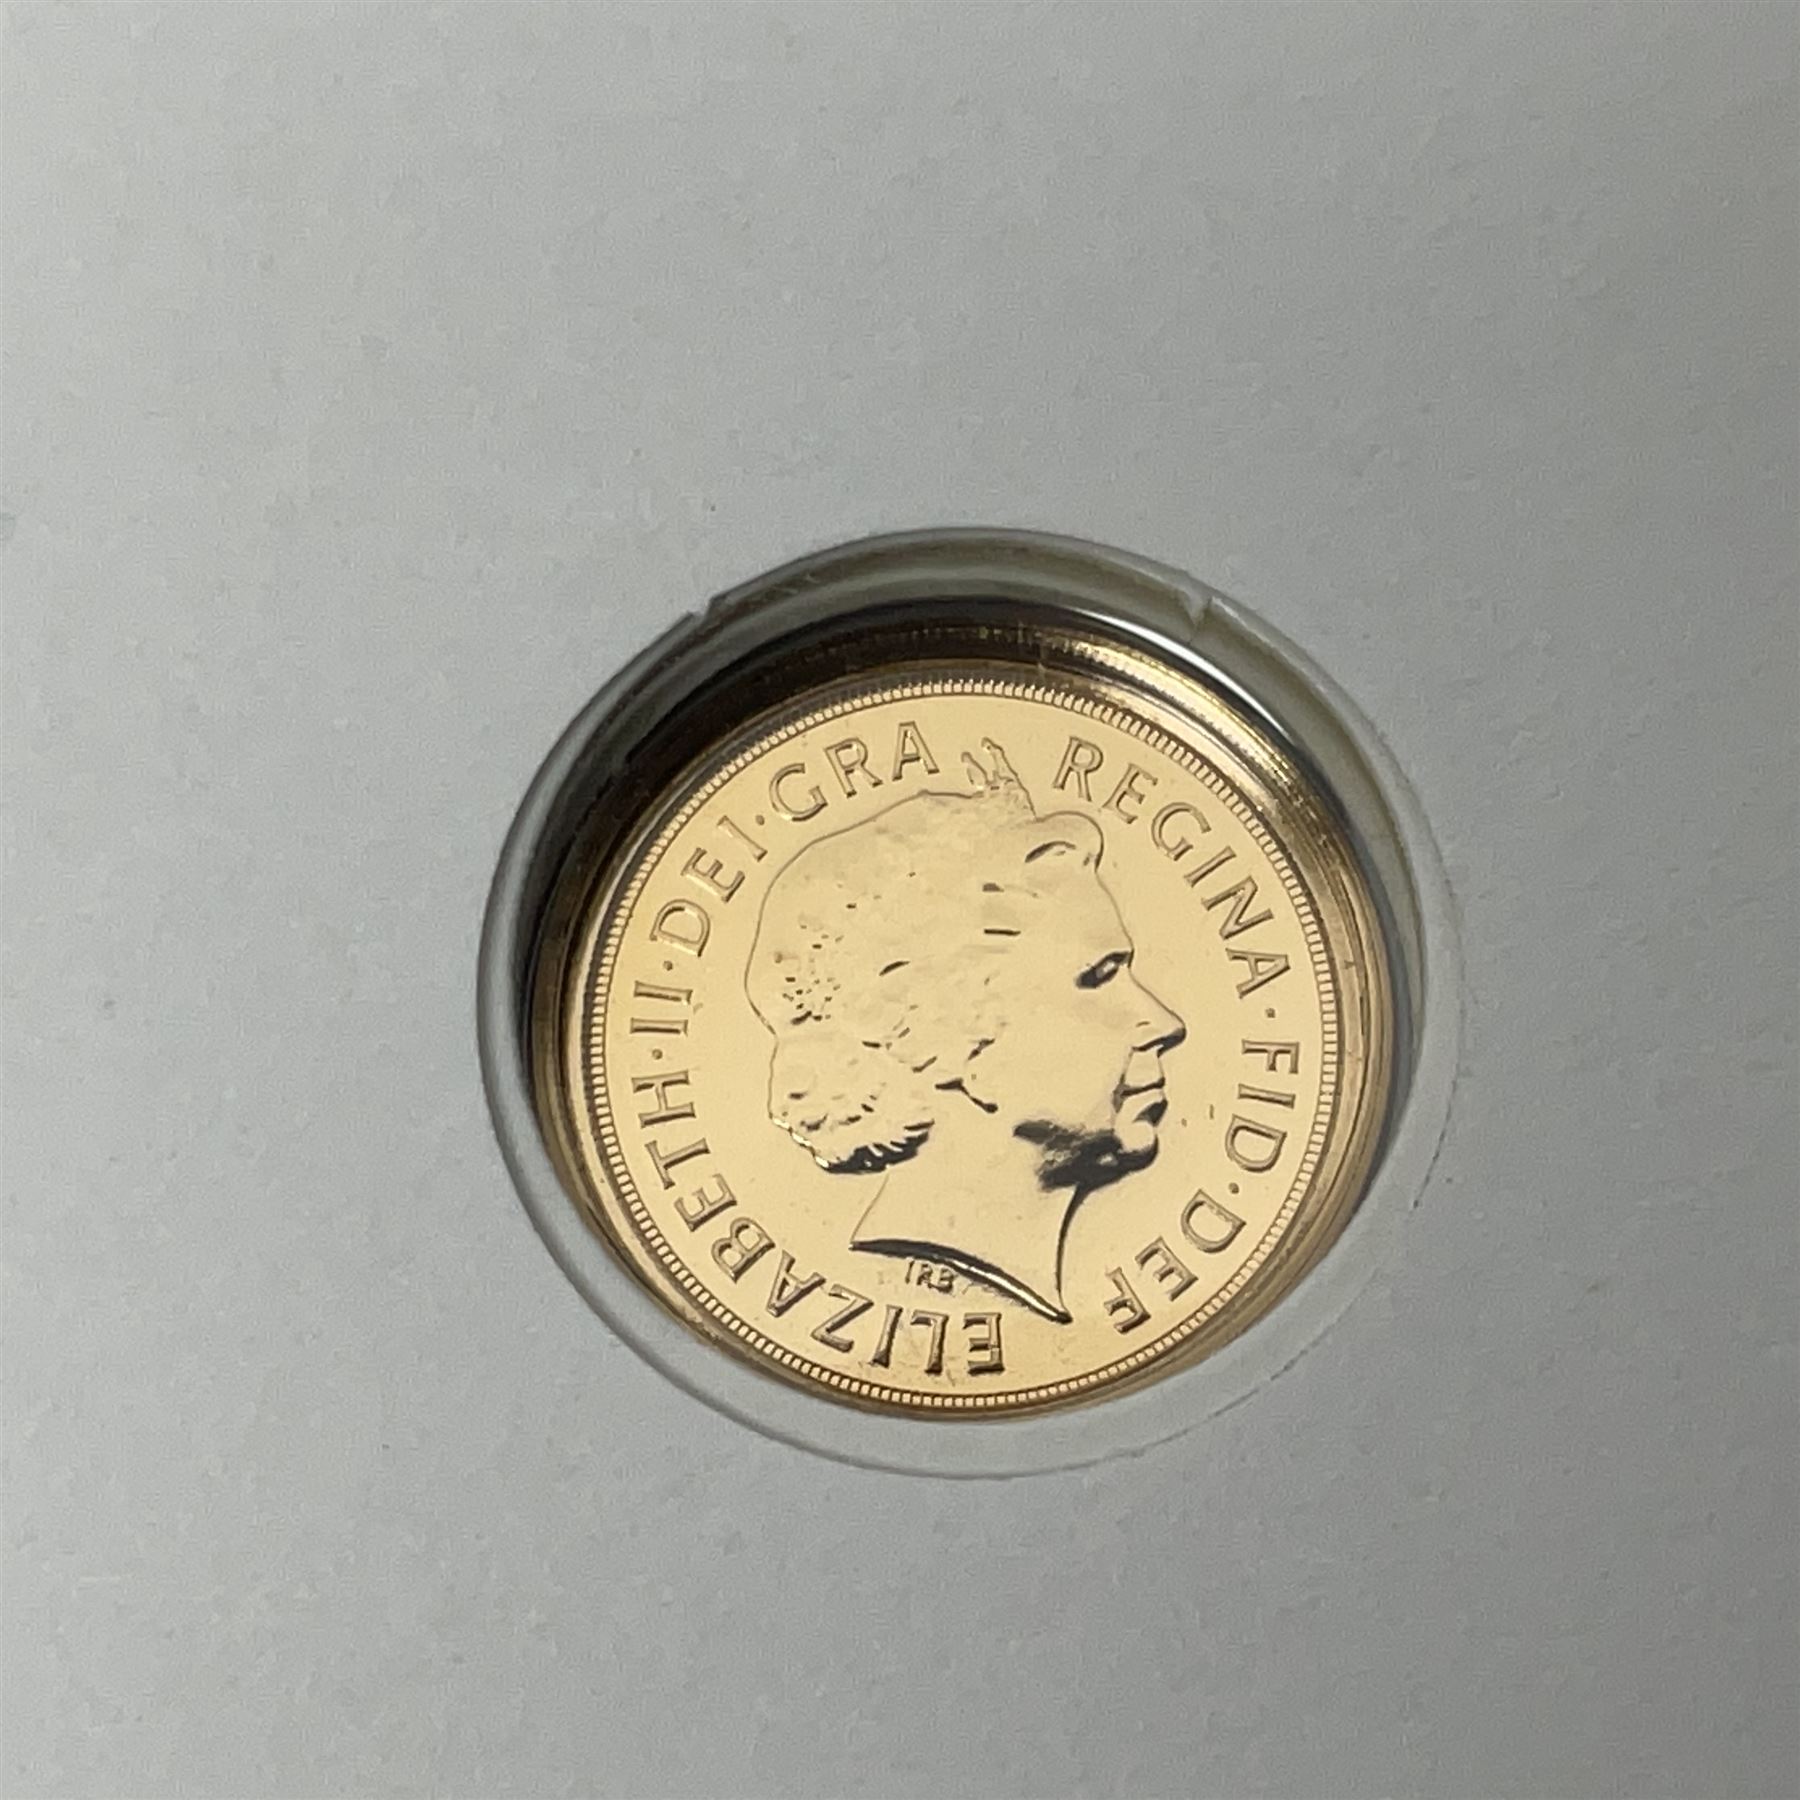 Queen Elizabeth II 2009 gold quarter sovereign coin - Image 4 of 6